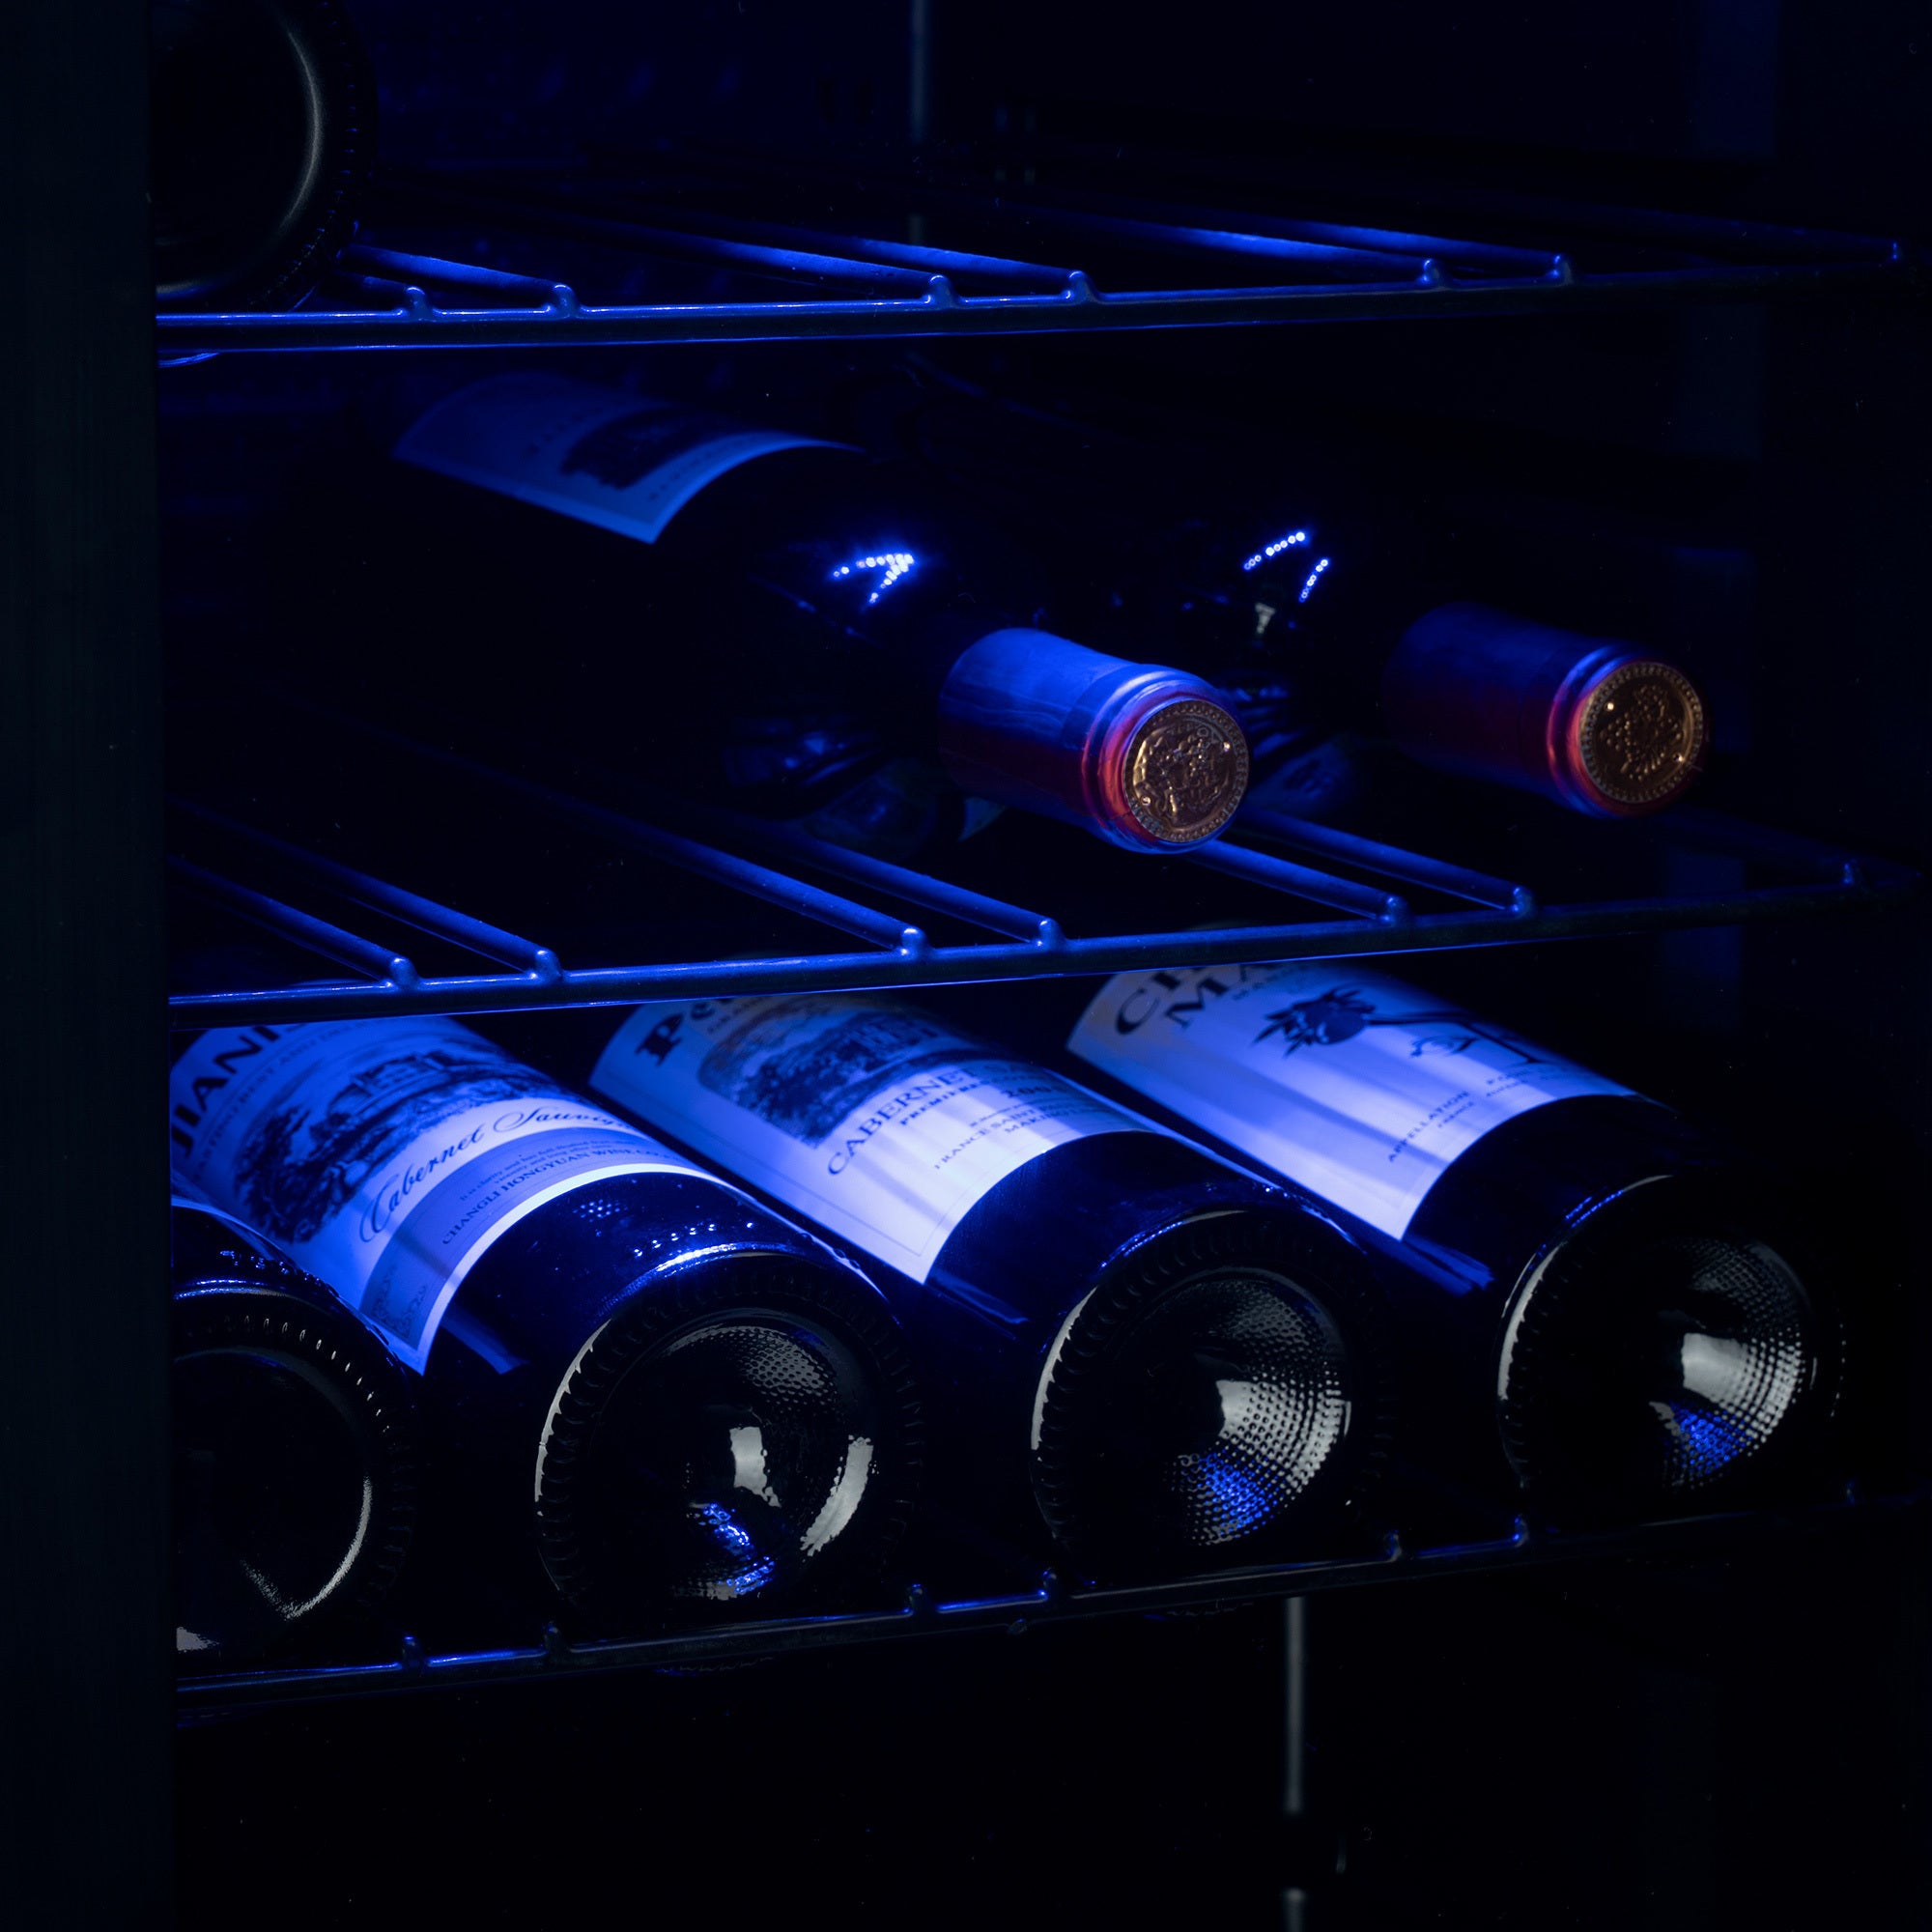 Digital Temperature Control Countertop Freestanding Wine Cellars